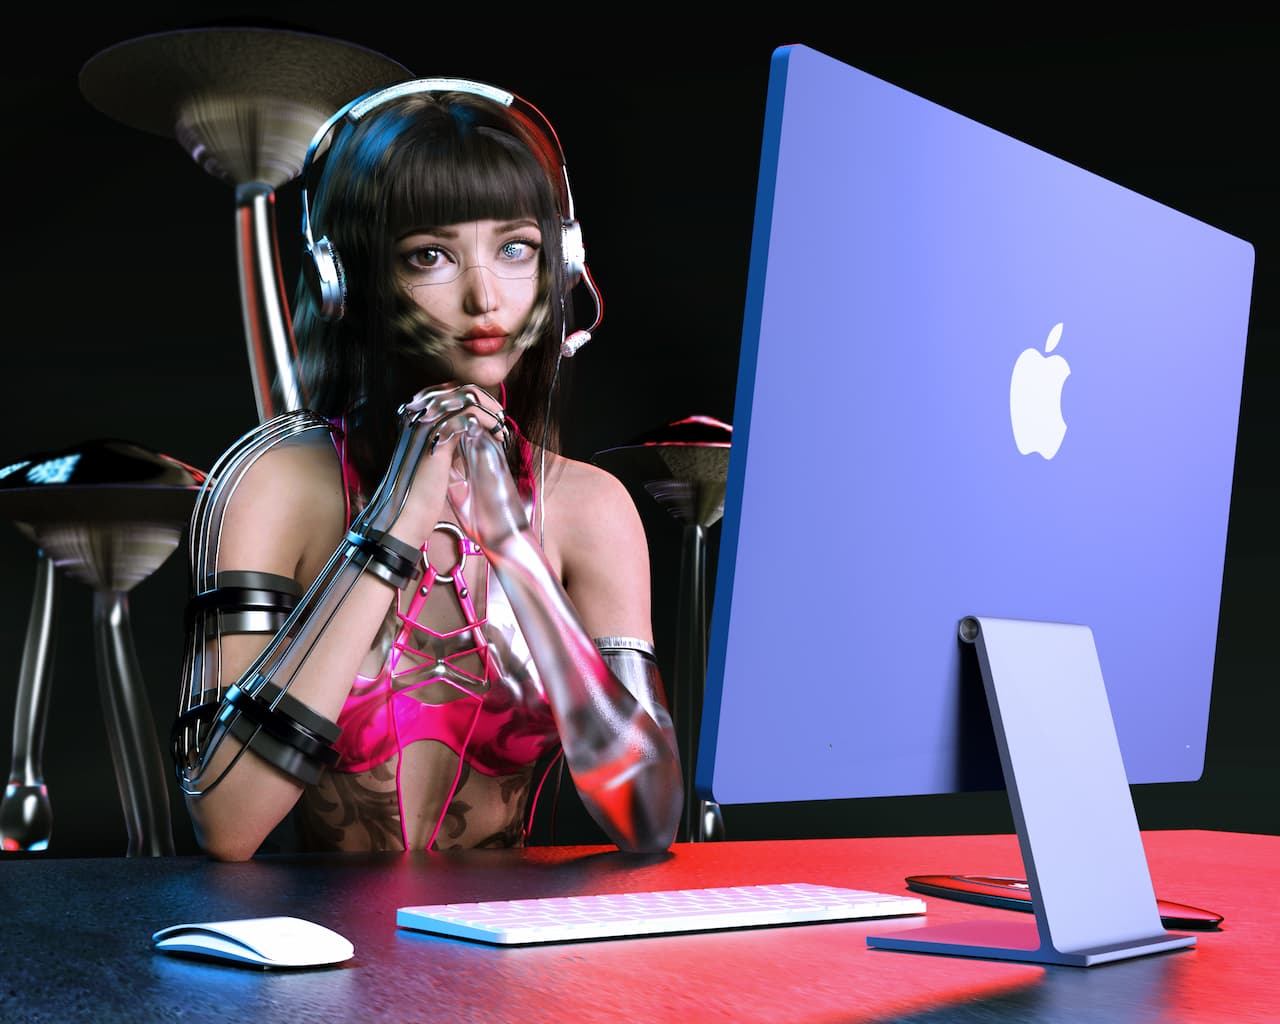 Ruby Gloom 香港設計師分享用 iMac 打造虛擬偶像 Ruby9100m